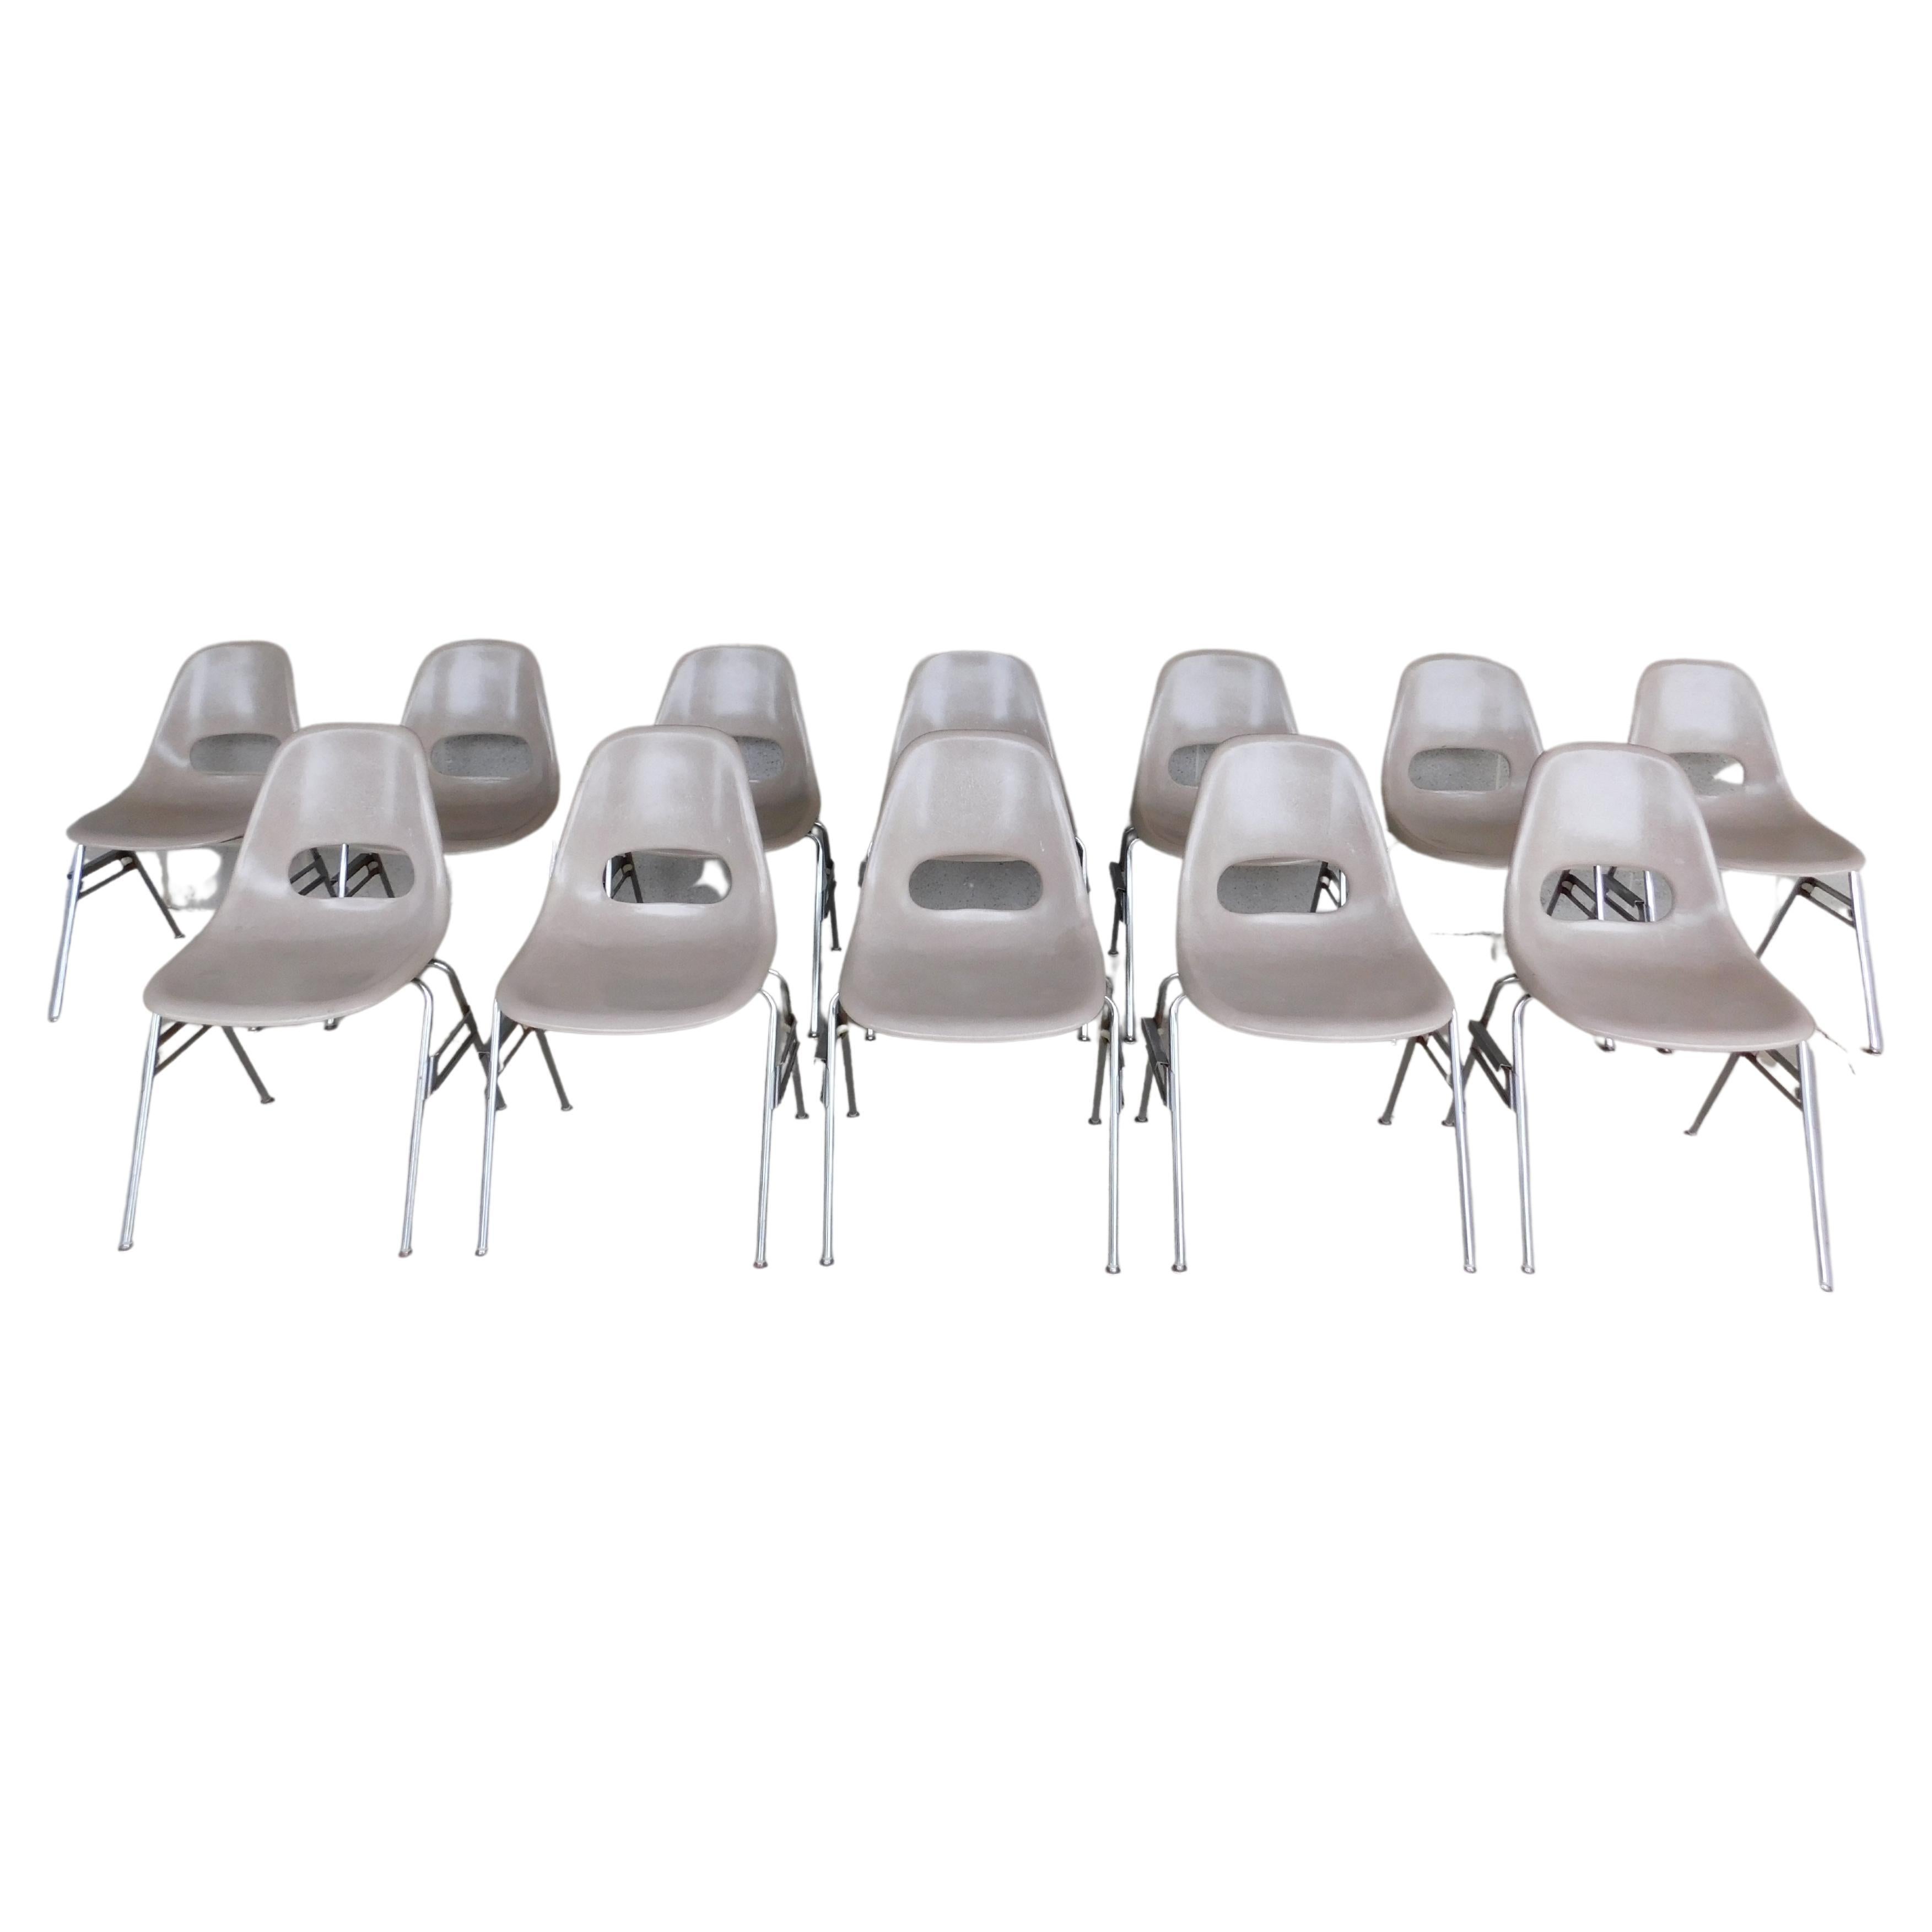 Krueger Metall Products Taupefarbene Glasfaser-Stühle, 12er-Set